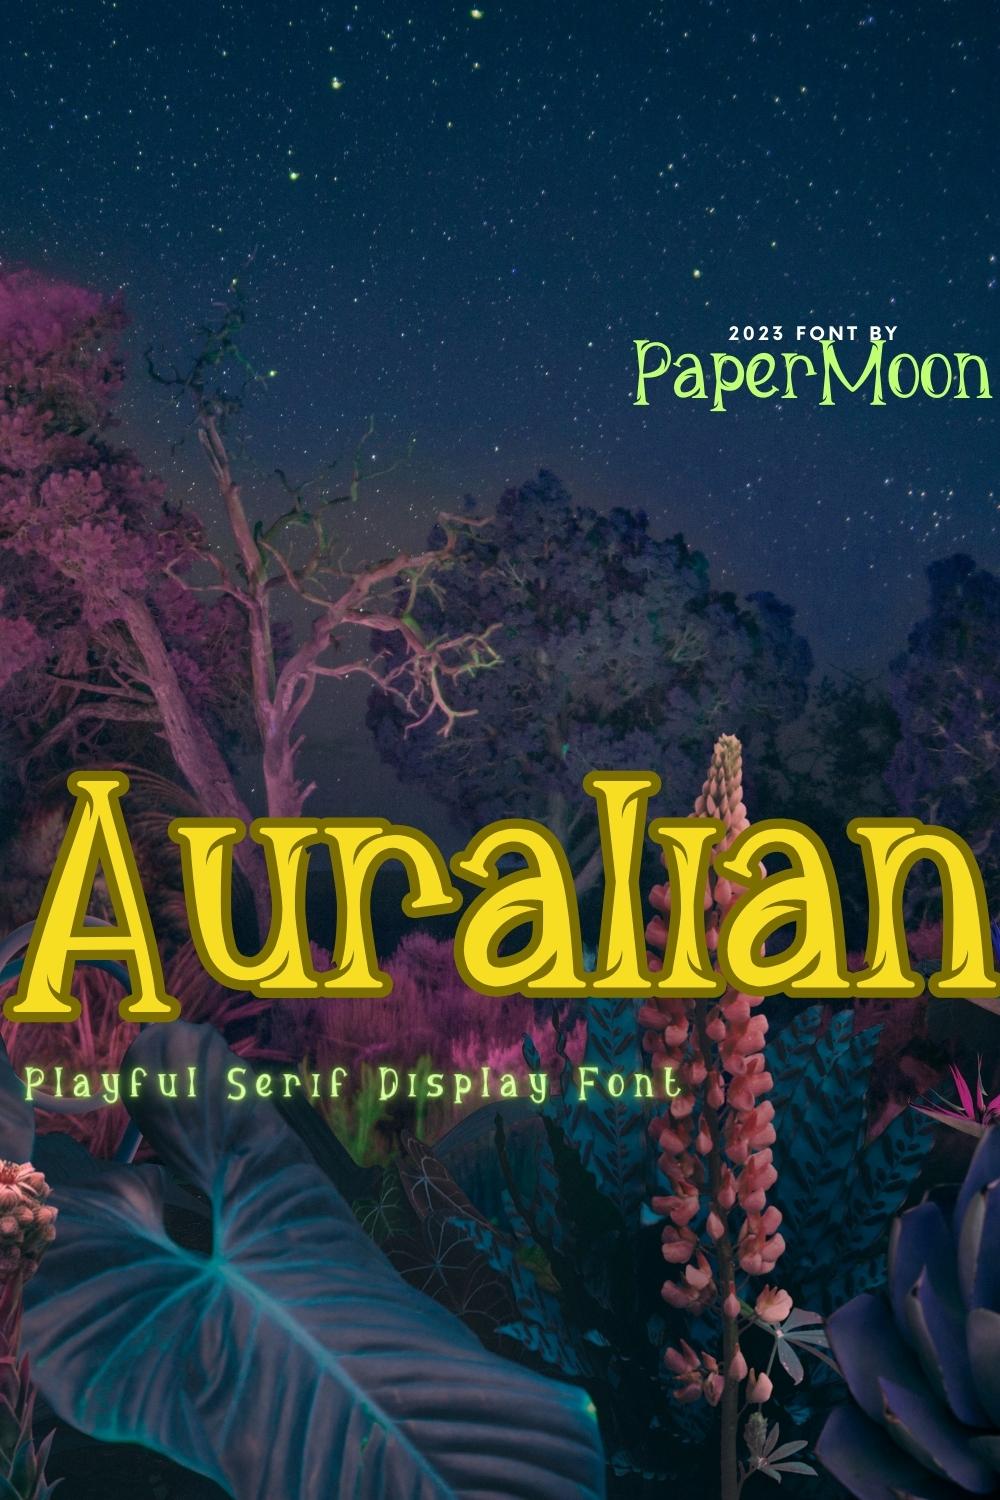 Auralian - Playful Serif Display Font pinterest preview image.